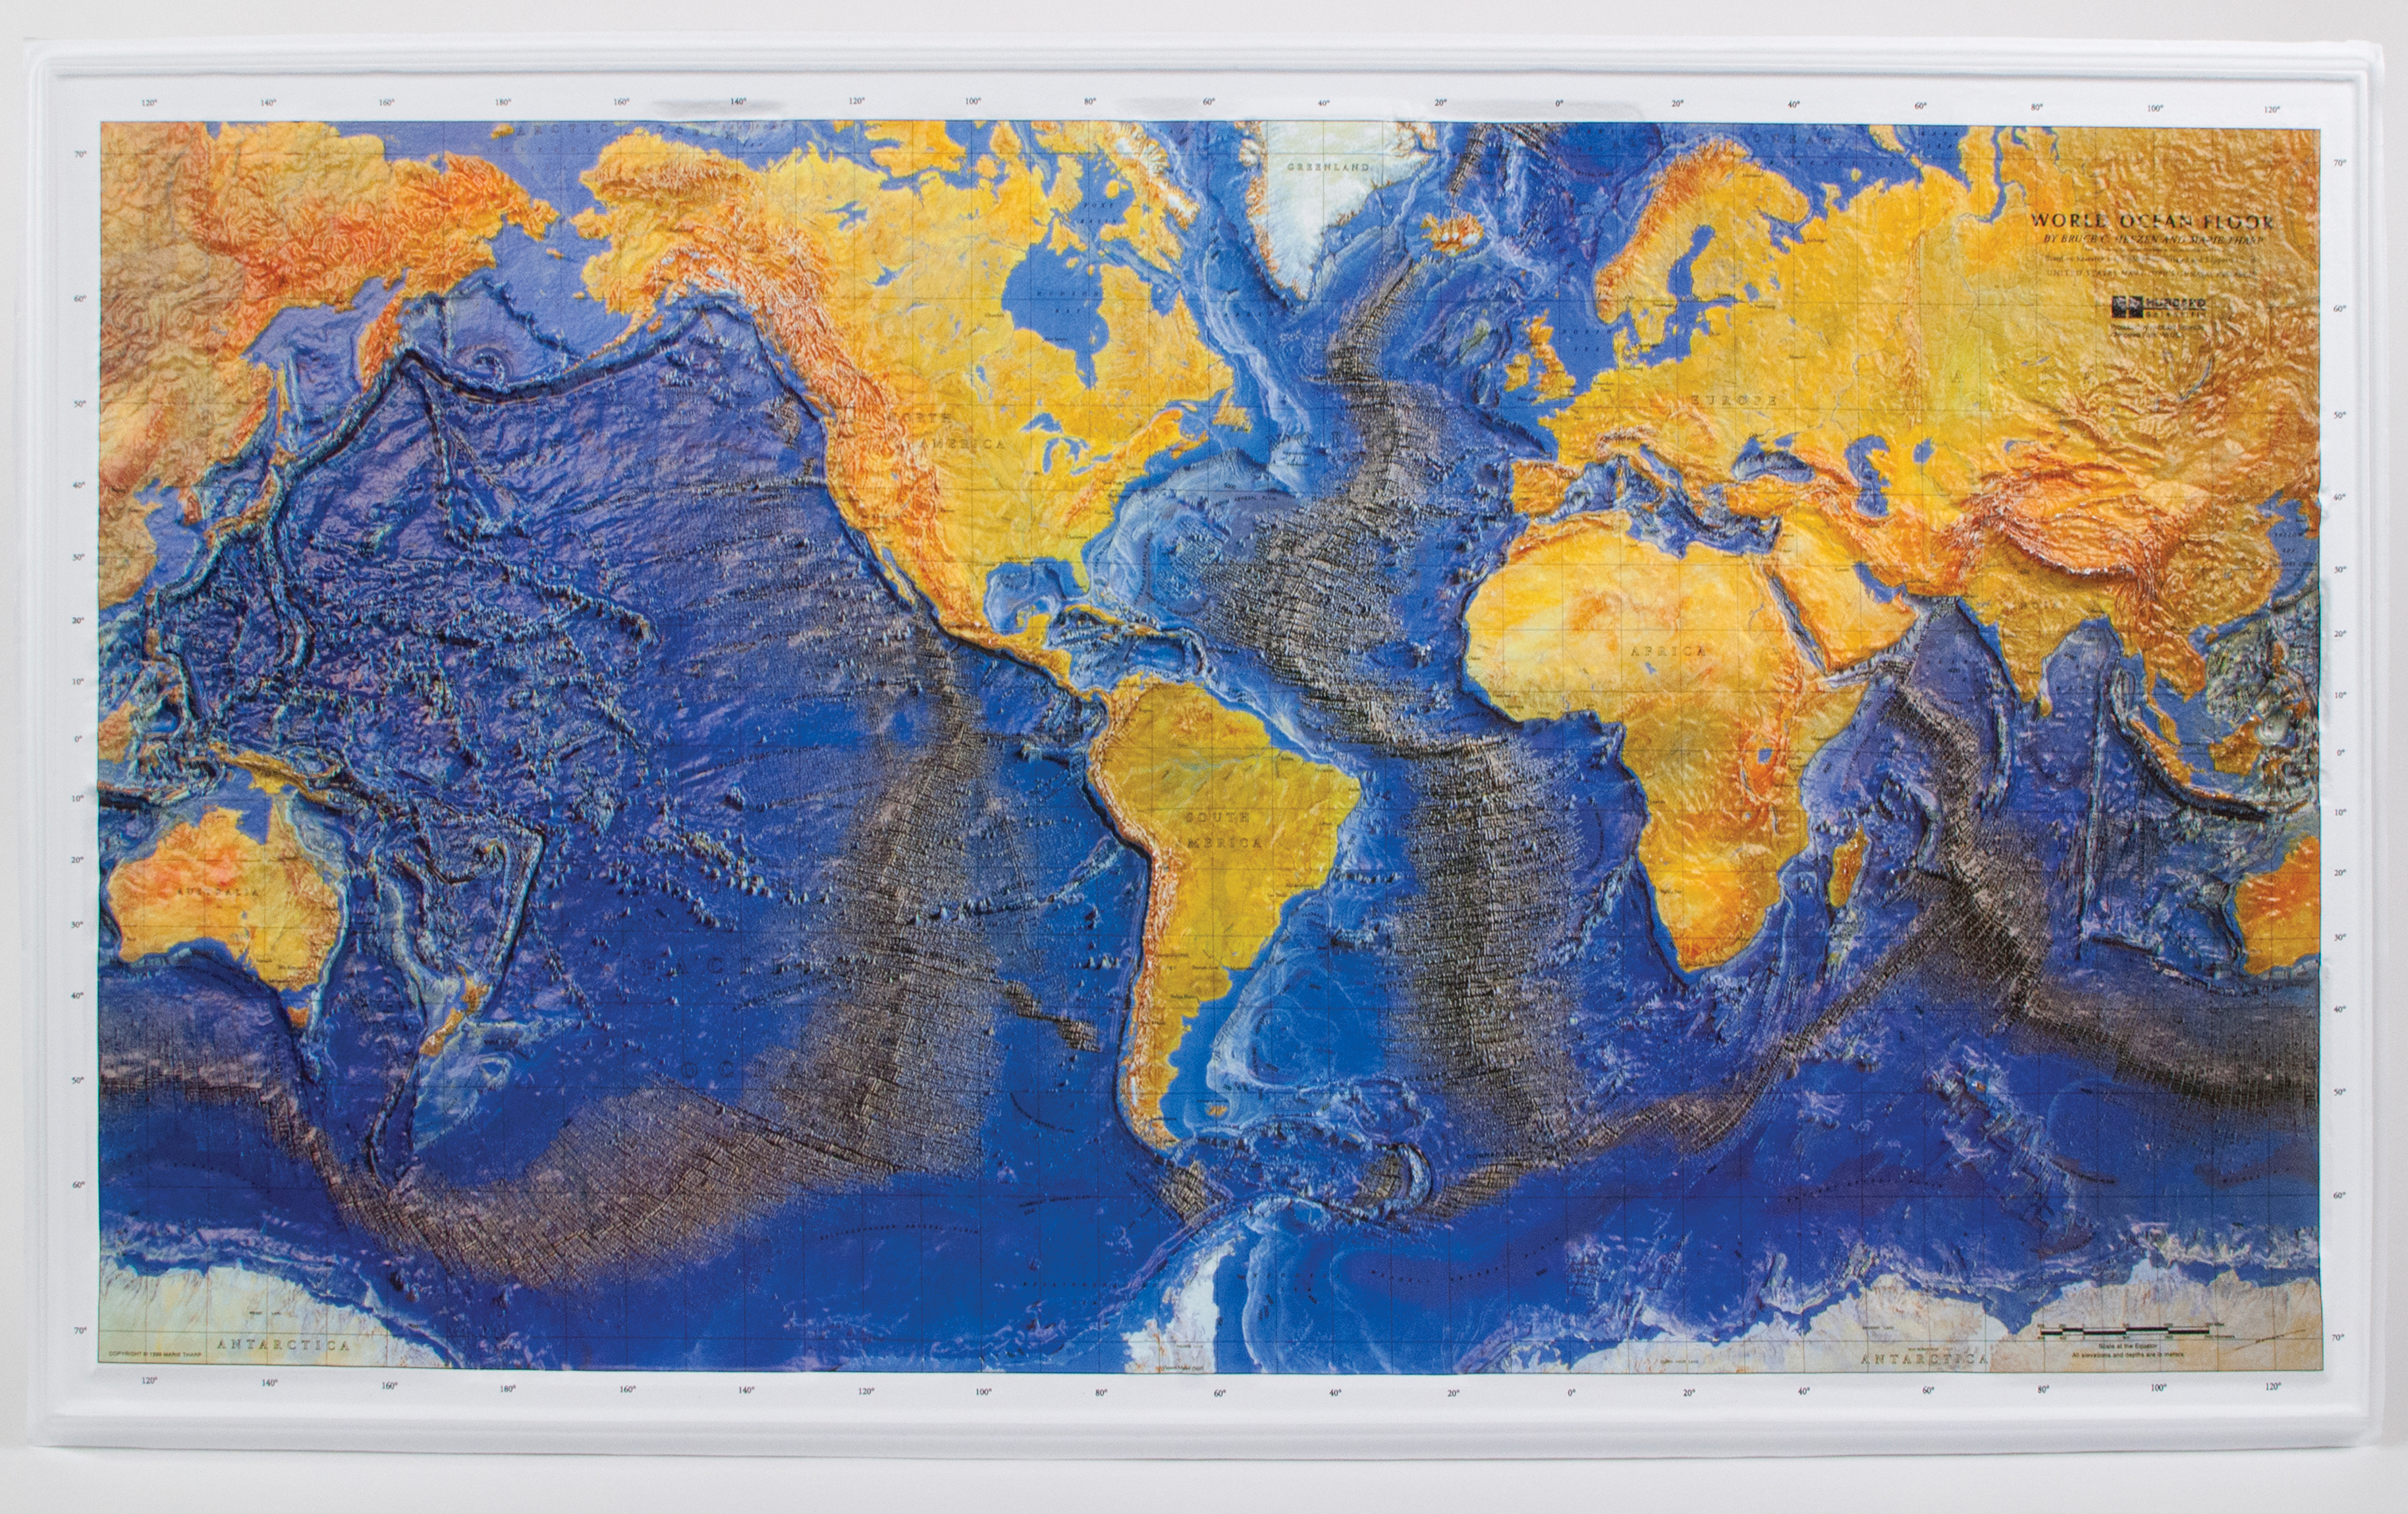 Рельеф поверхности океана. Карта рельефа дна мирового океана. Рельеф дна океана карта. Рельеф океанического дна карта. Рельеф мирового океана карта.